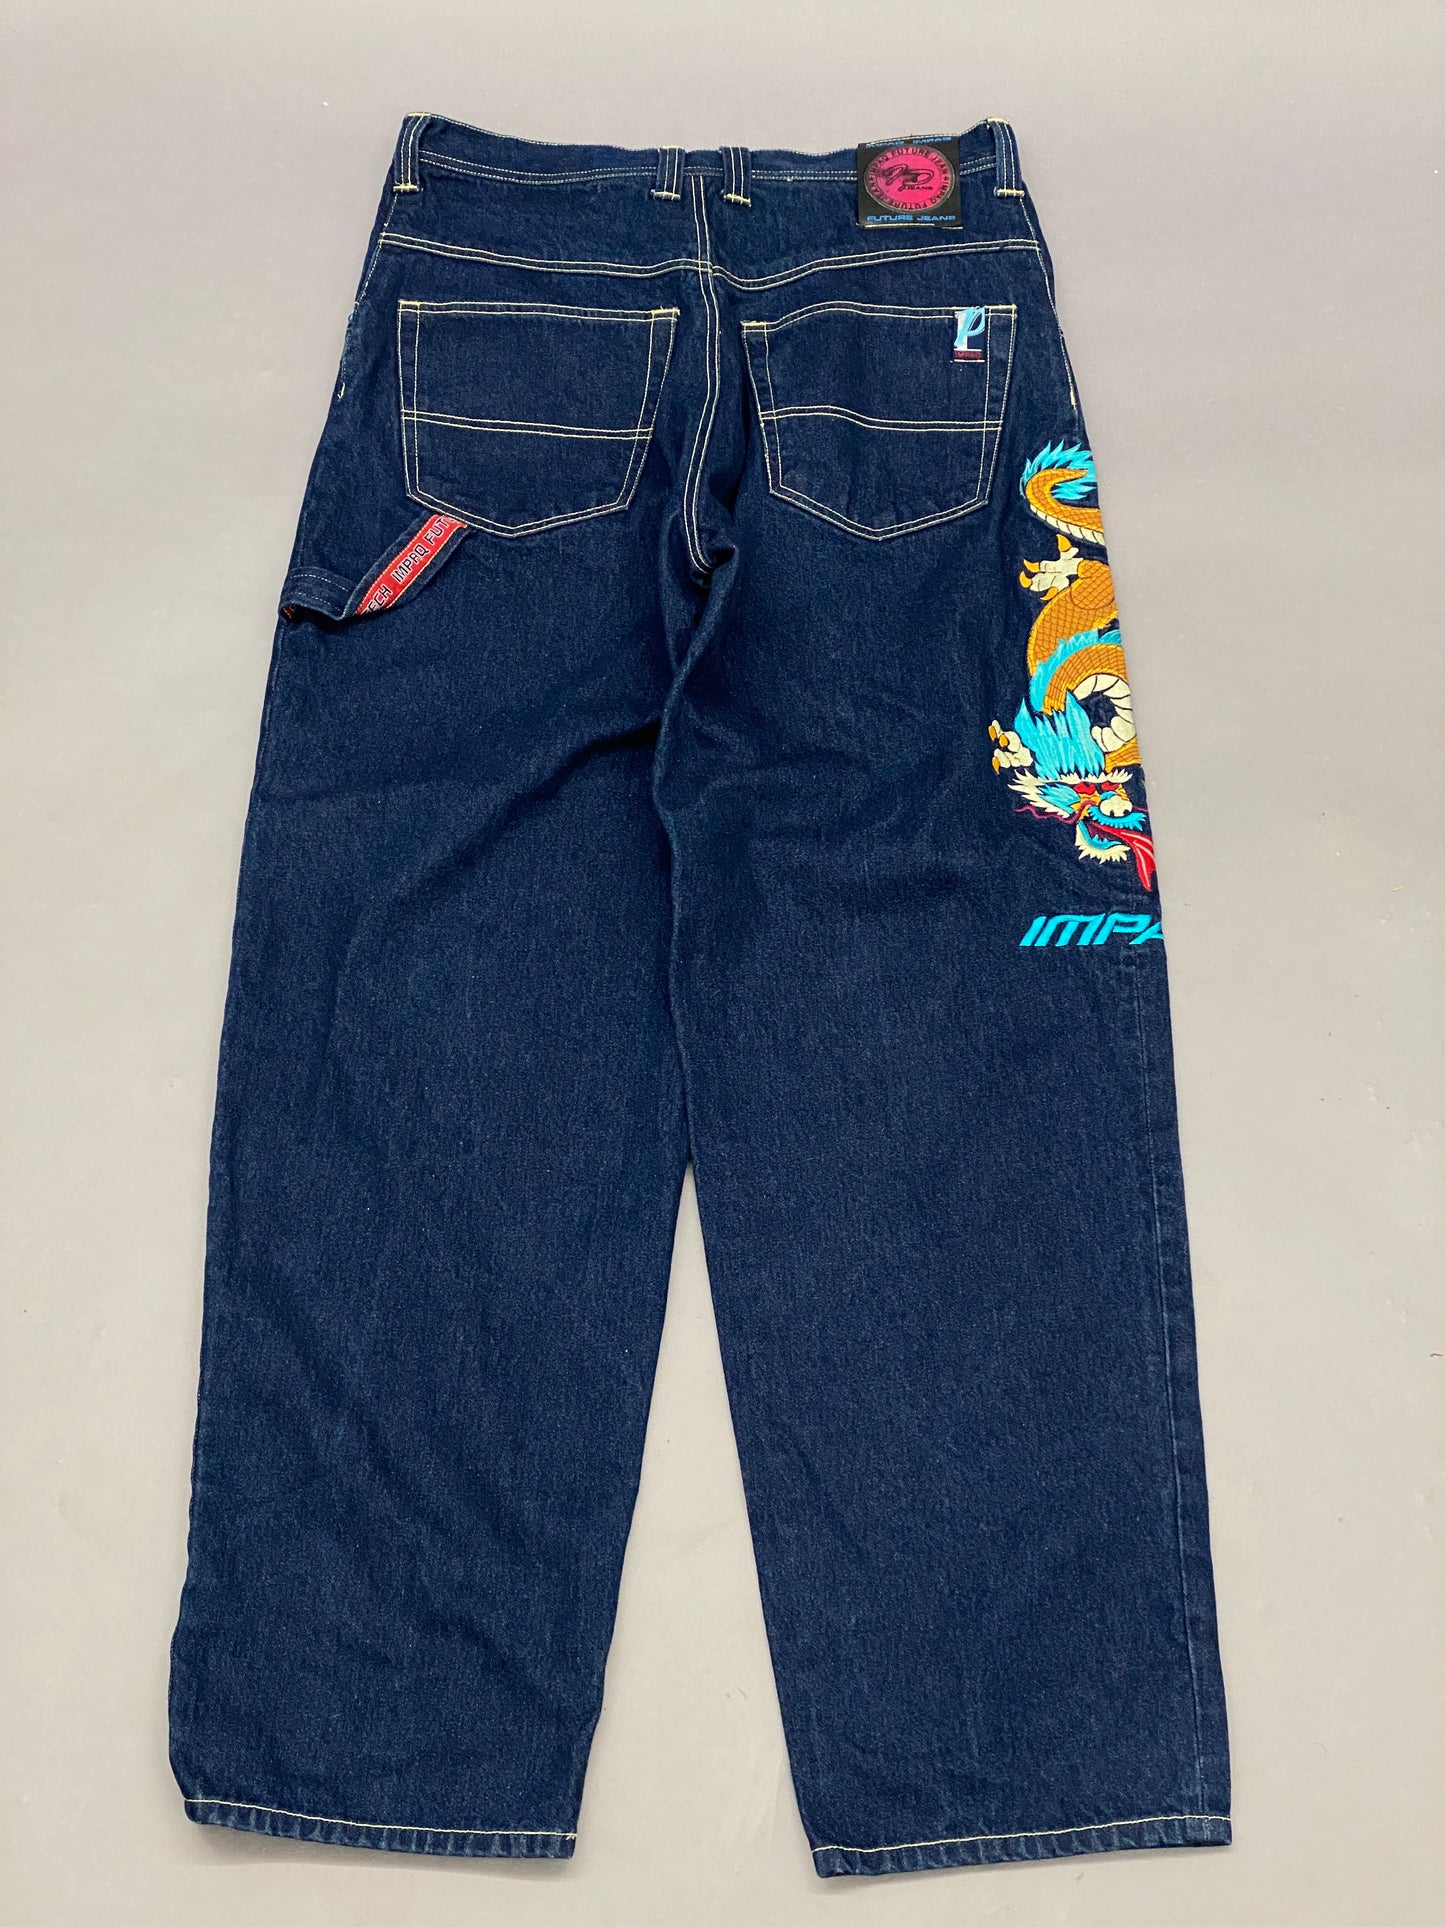 IMPAQ Dragon Vintage Jeans - 36